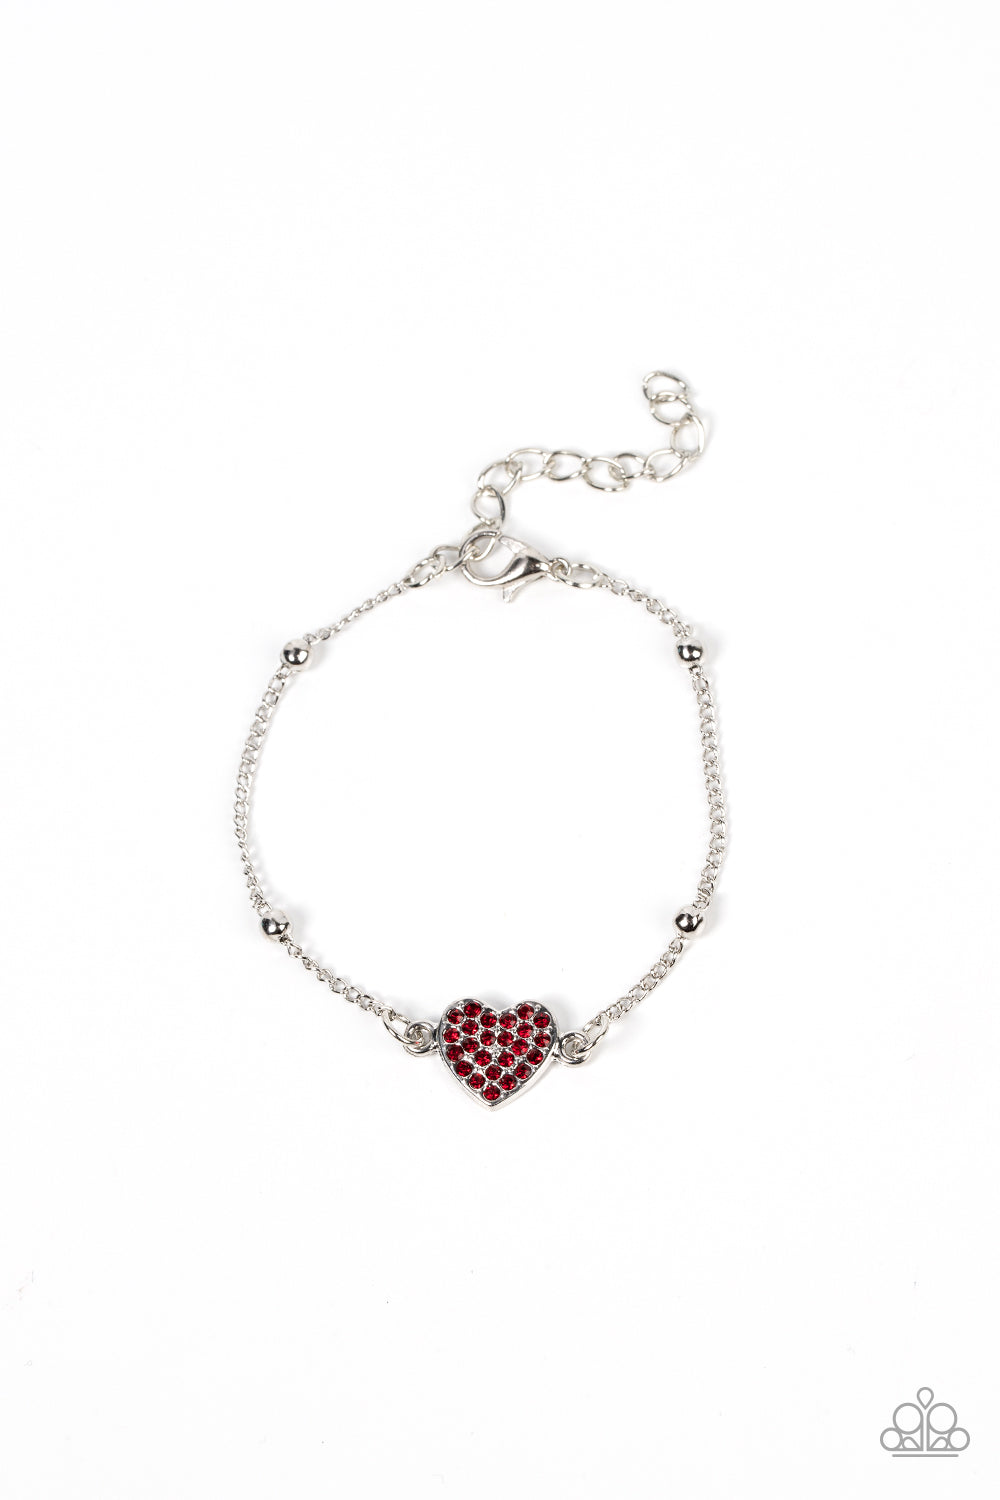 Paparazzi Bracelets - Heartachingly Adorable - Red